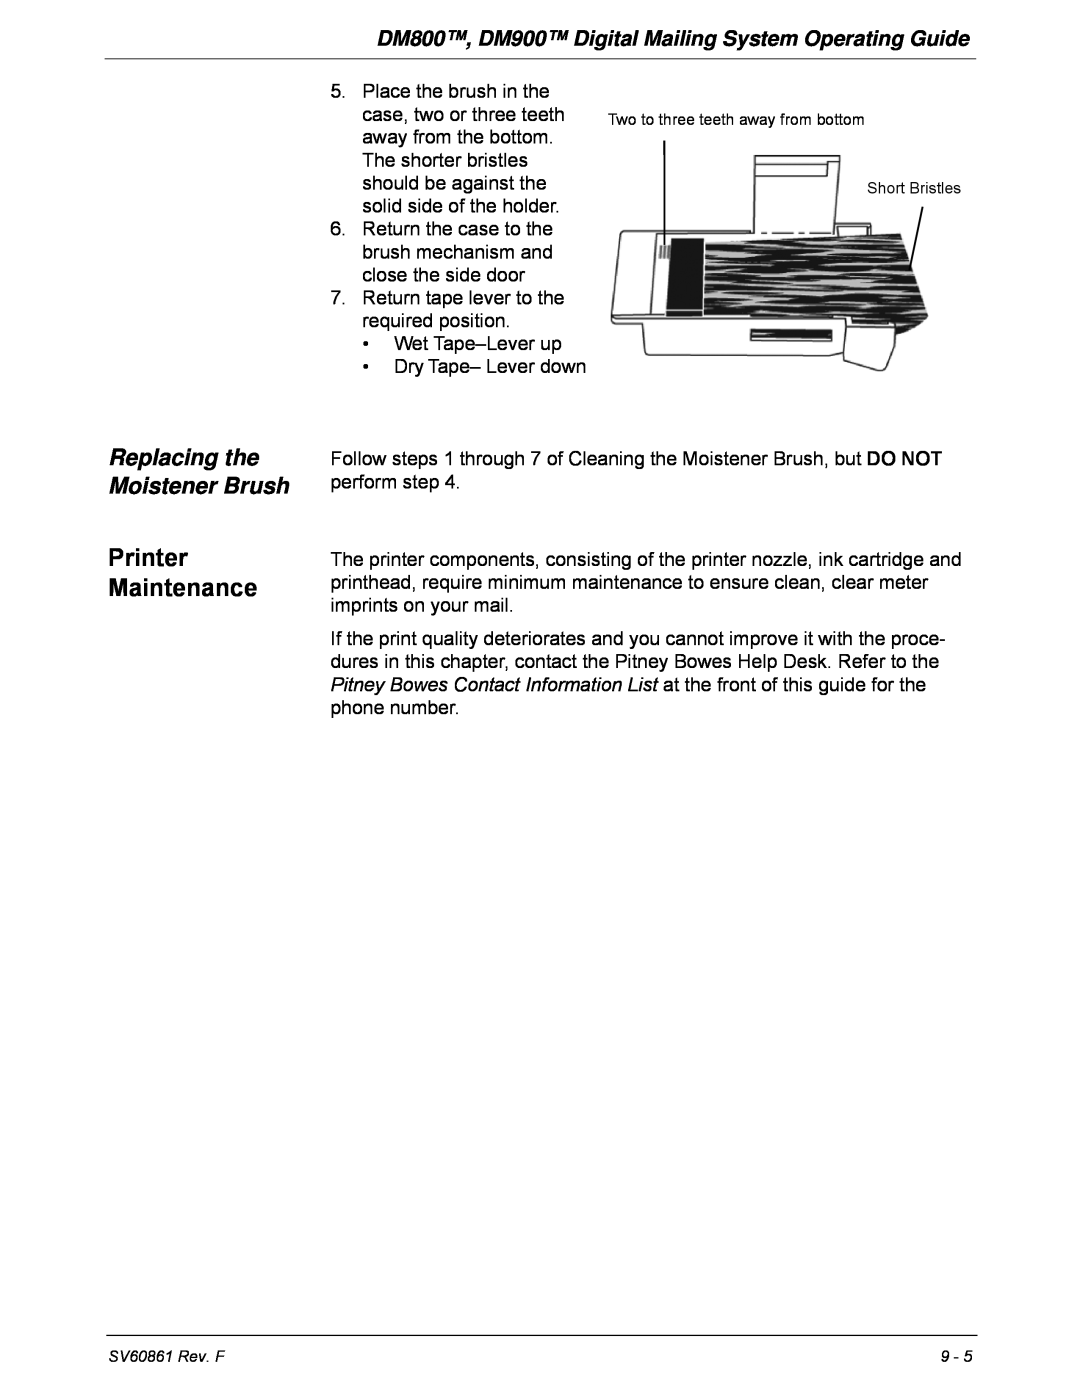 Pitney Bowes Printer Maintenance, Replacing the Moistener Brush, DM800, DM900 Digital Mailing System Operating Guide 